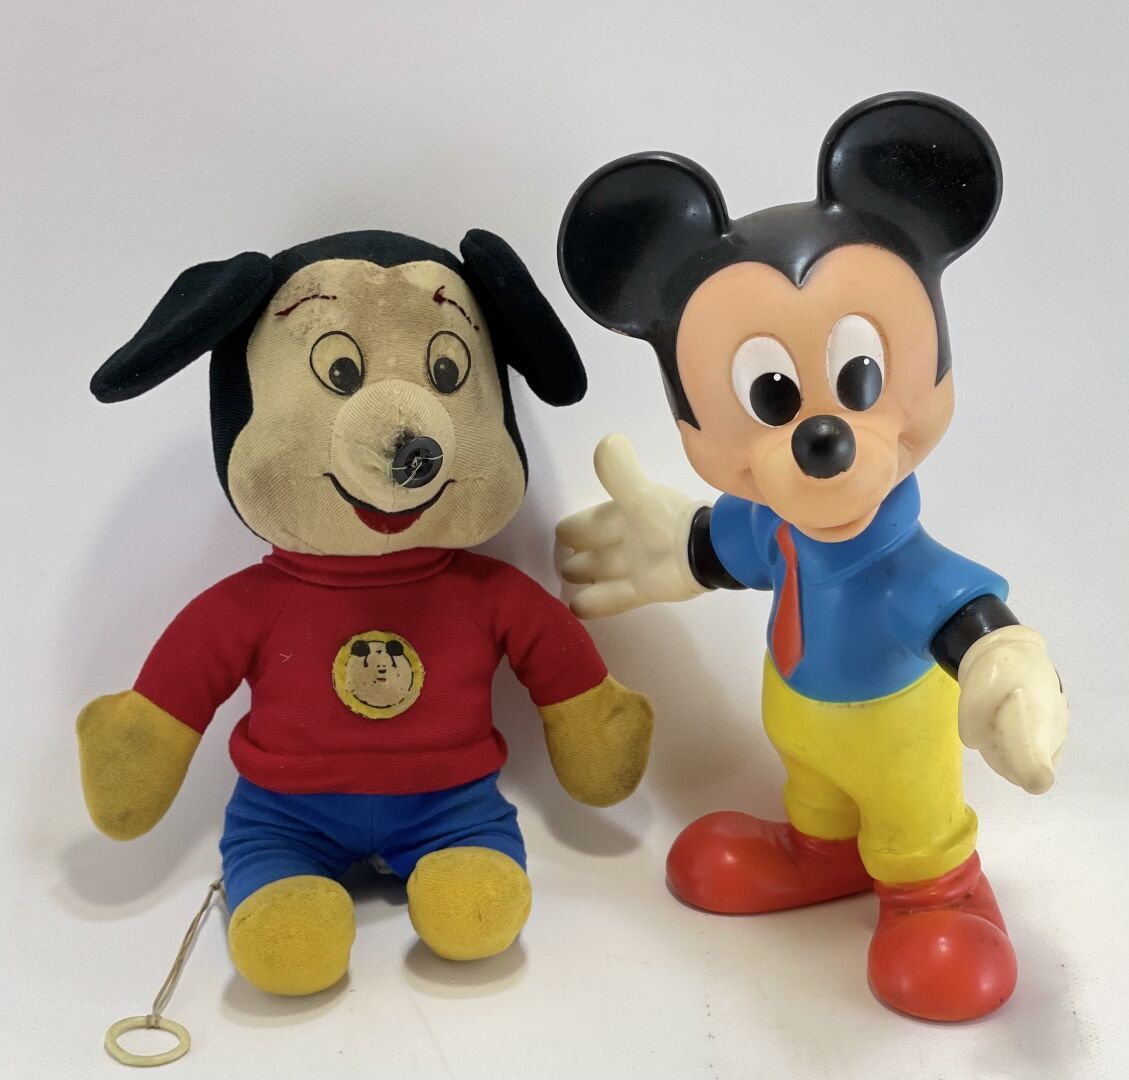 MICKEY MOUSE DEUX FIGURINES Deux figurines de Mickey Mouse. 
Une figurine en cao&hellip;